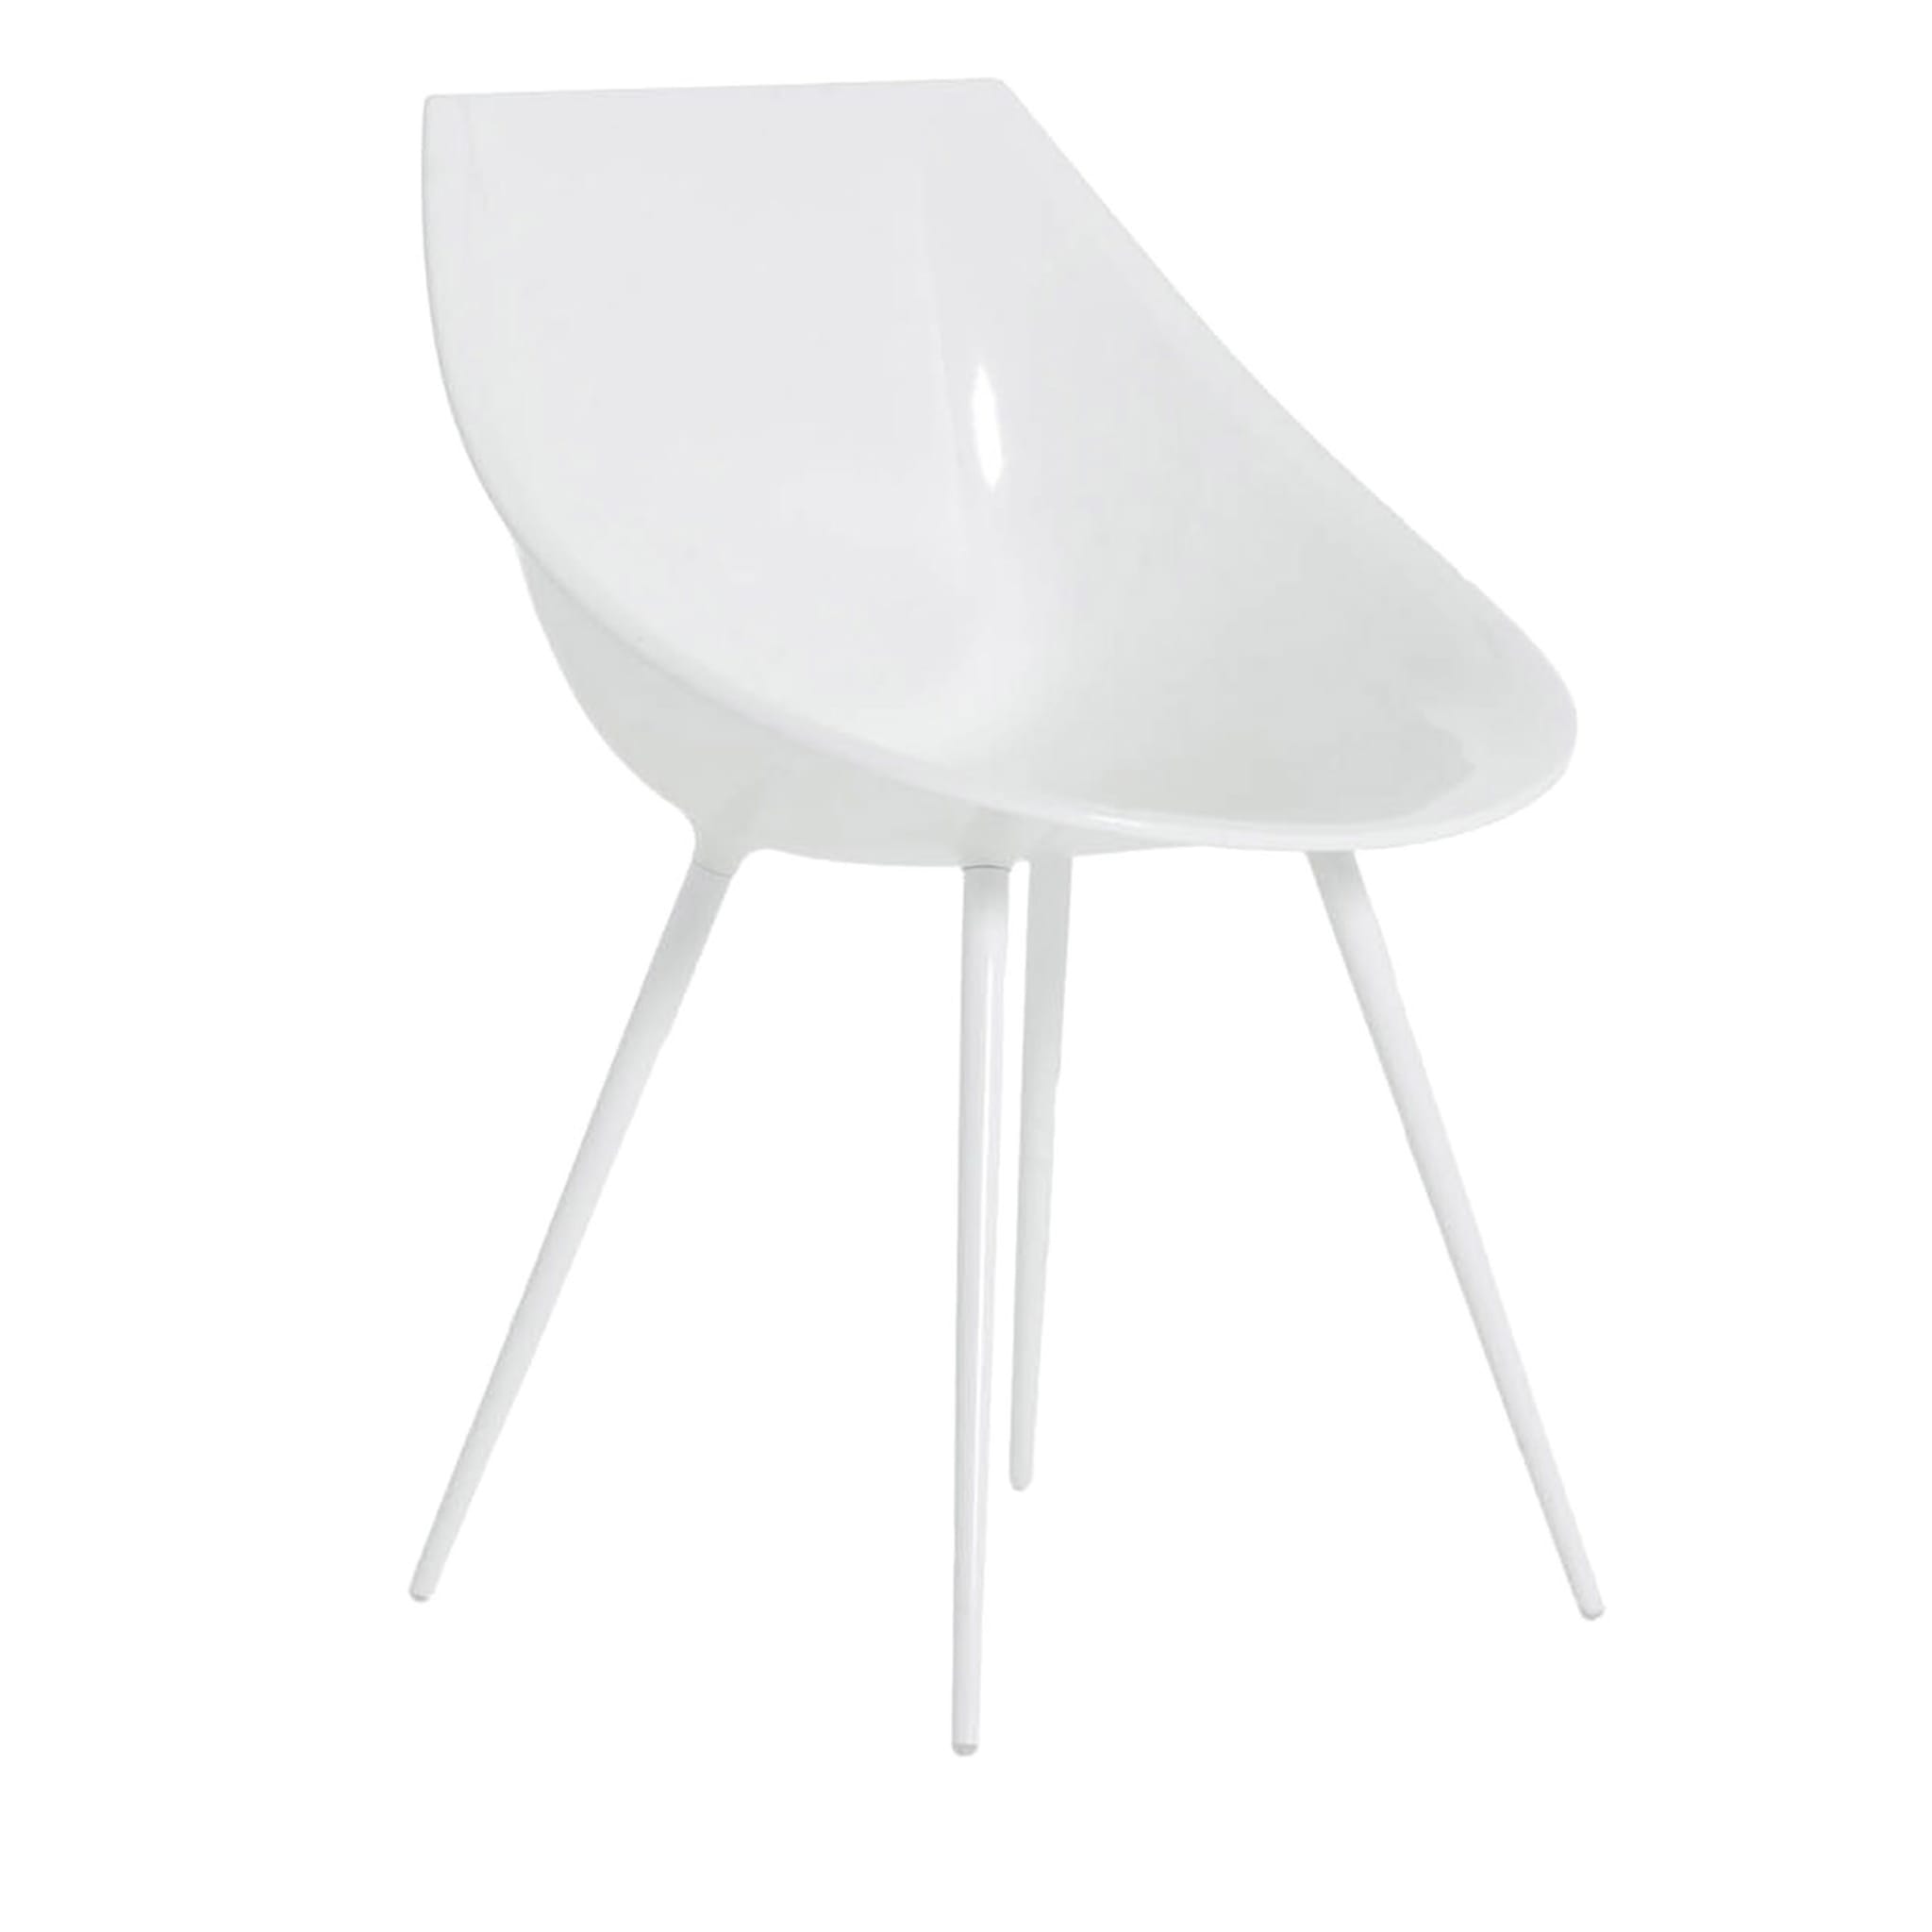 Lago' White Chair by Philippe Starck - Main view